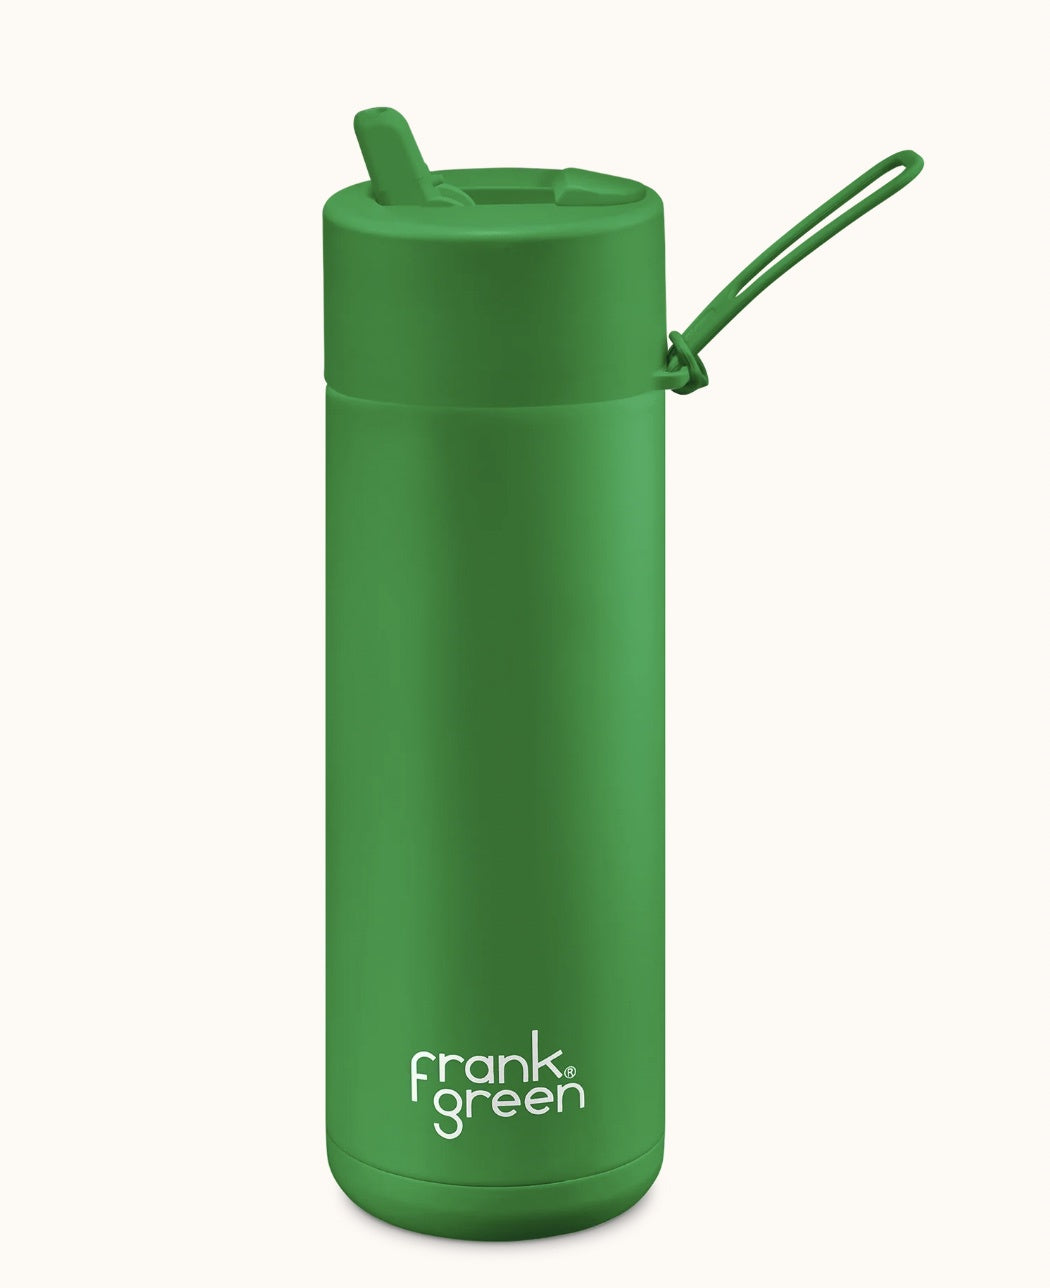 Limited Edition GREEN 20oz / 595ml Stainless Steel Ceramic Reusable Bottle Drink Bottles Frank Green   